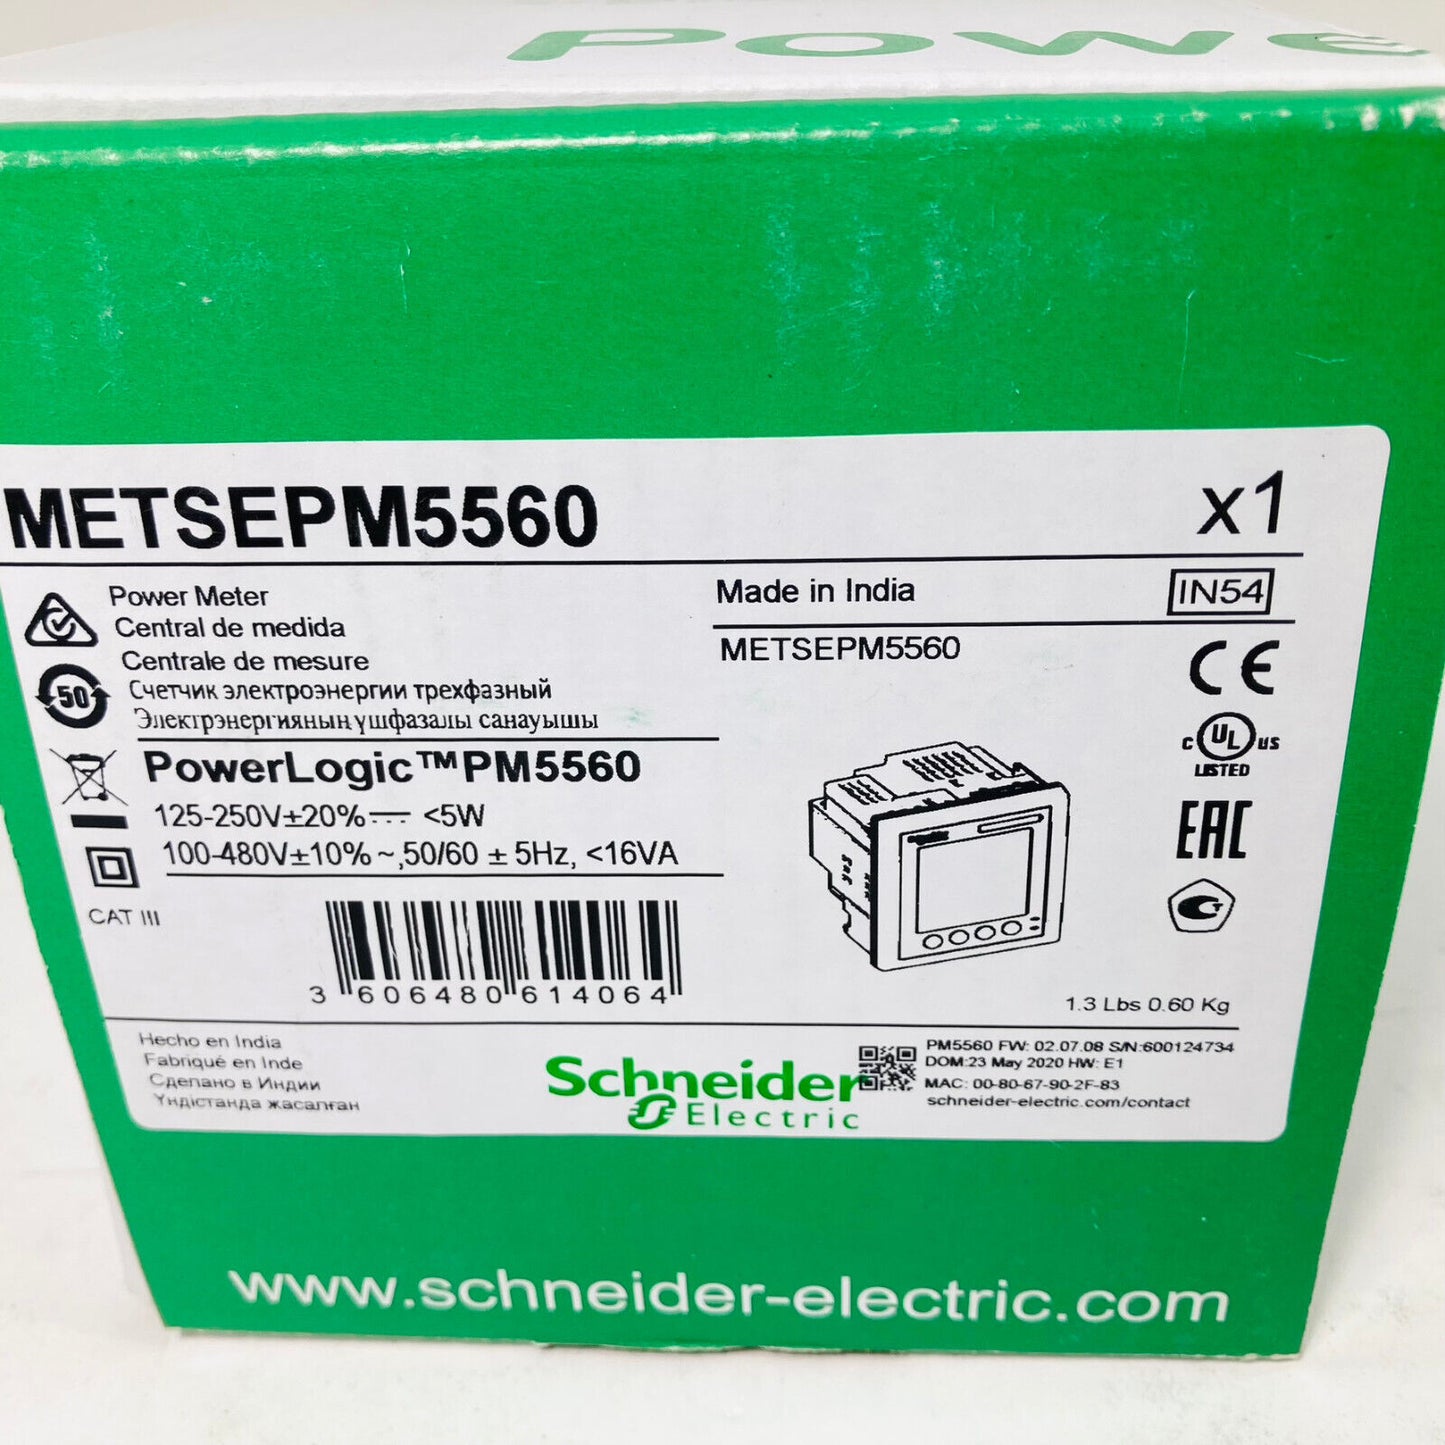 SCHNEIDER METSEPM5560 Power Meter PM5560, New In Box